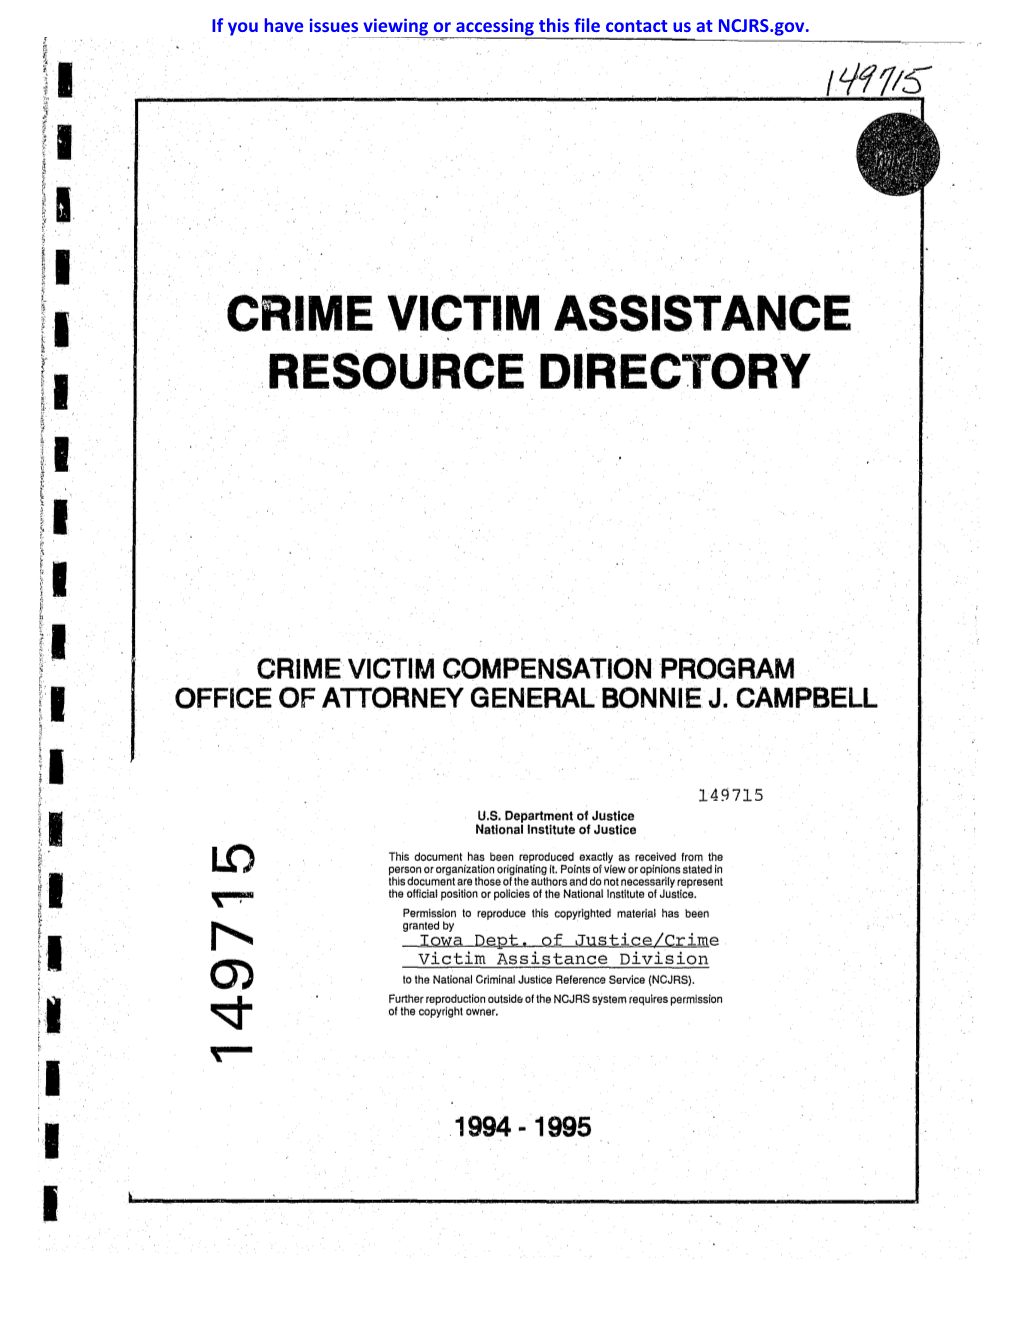 Crime Victim Assistance Resource Directory